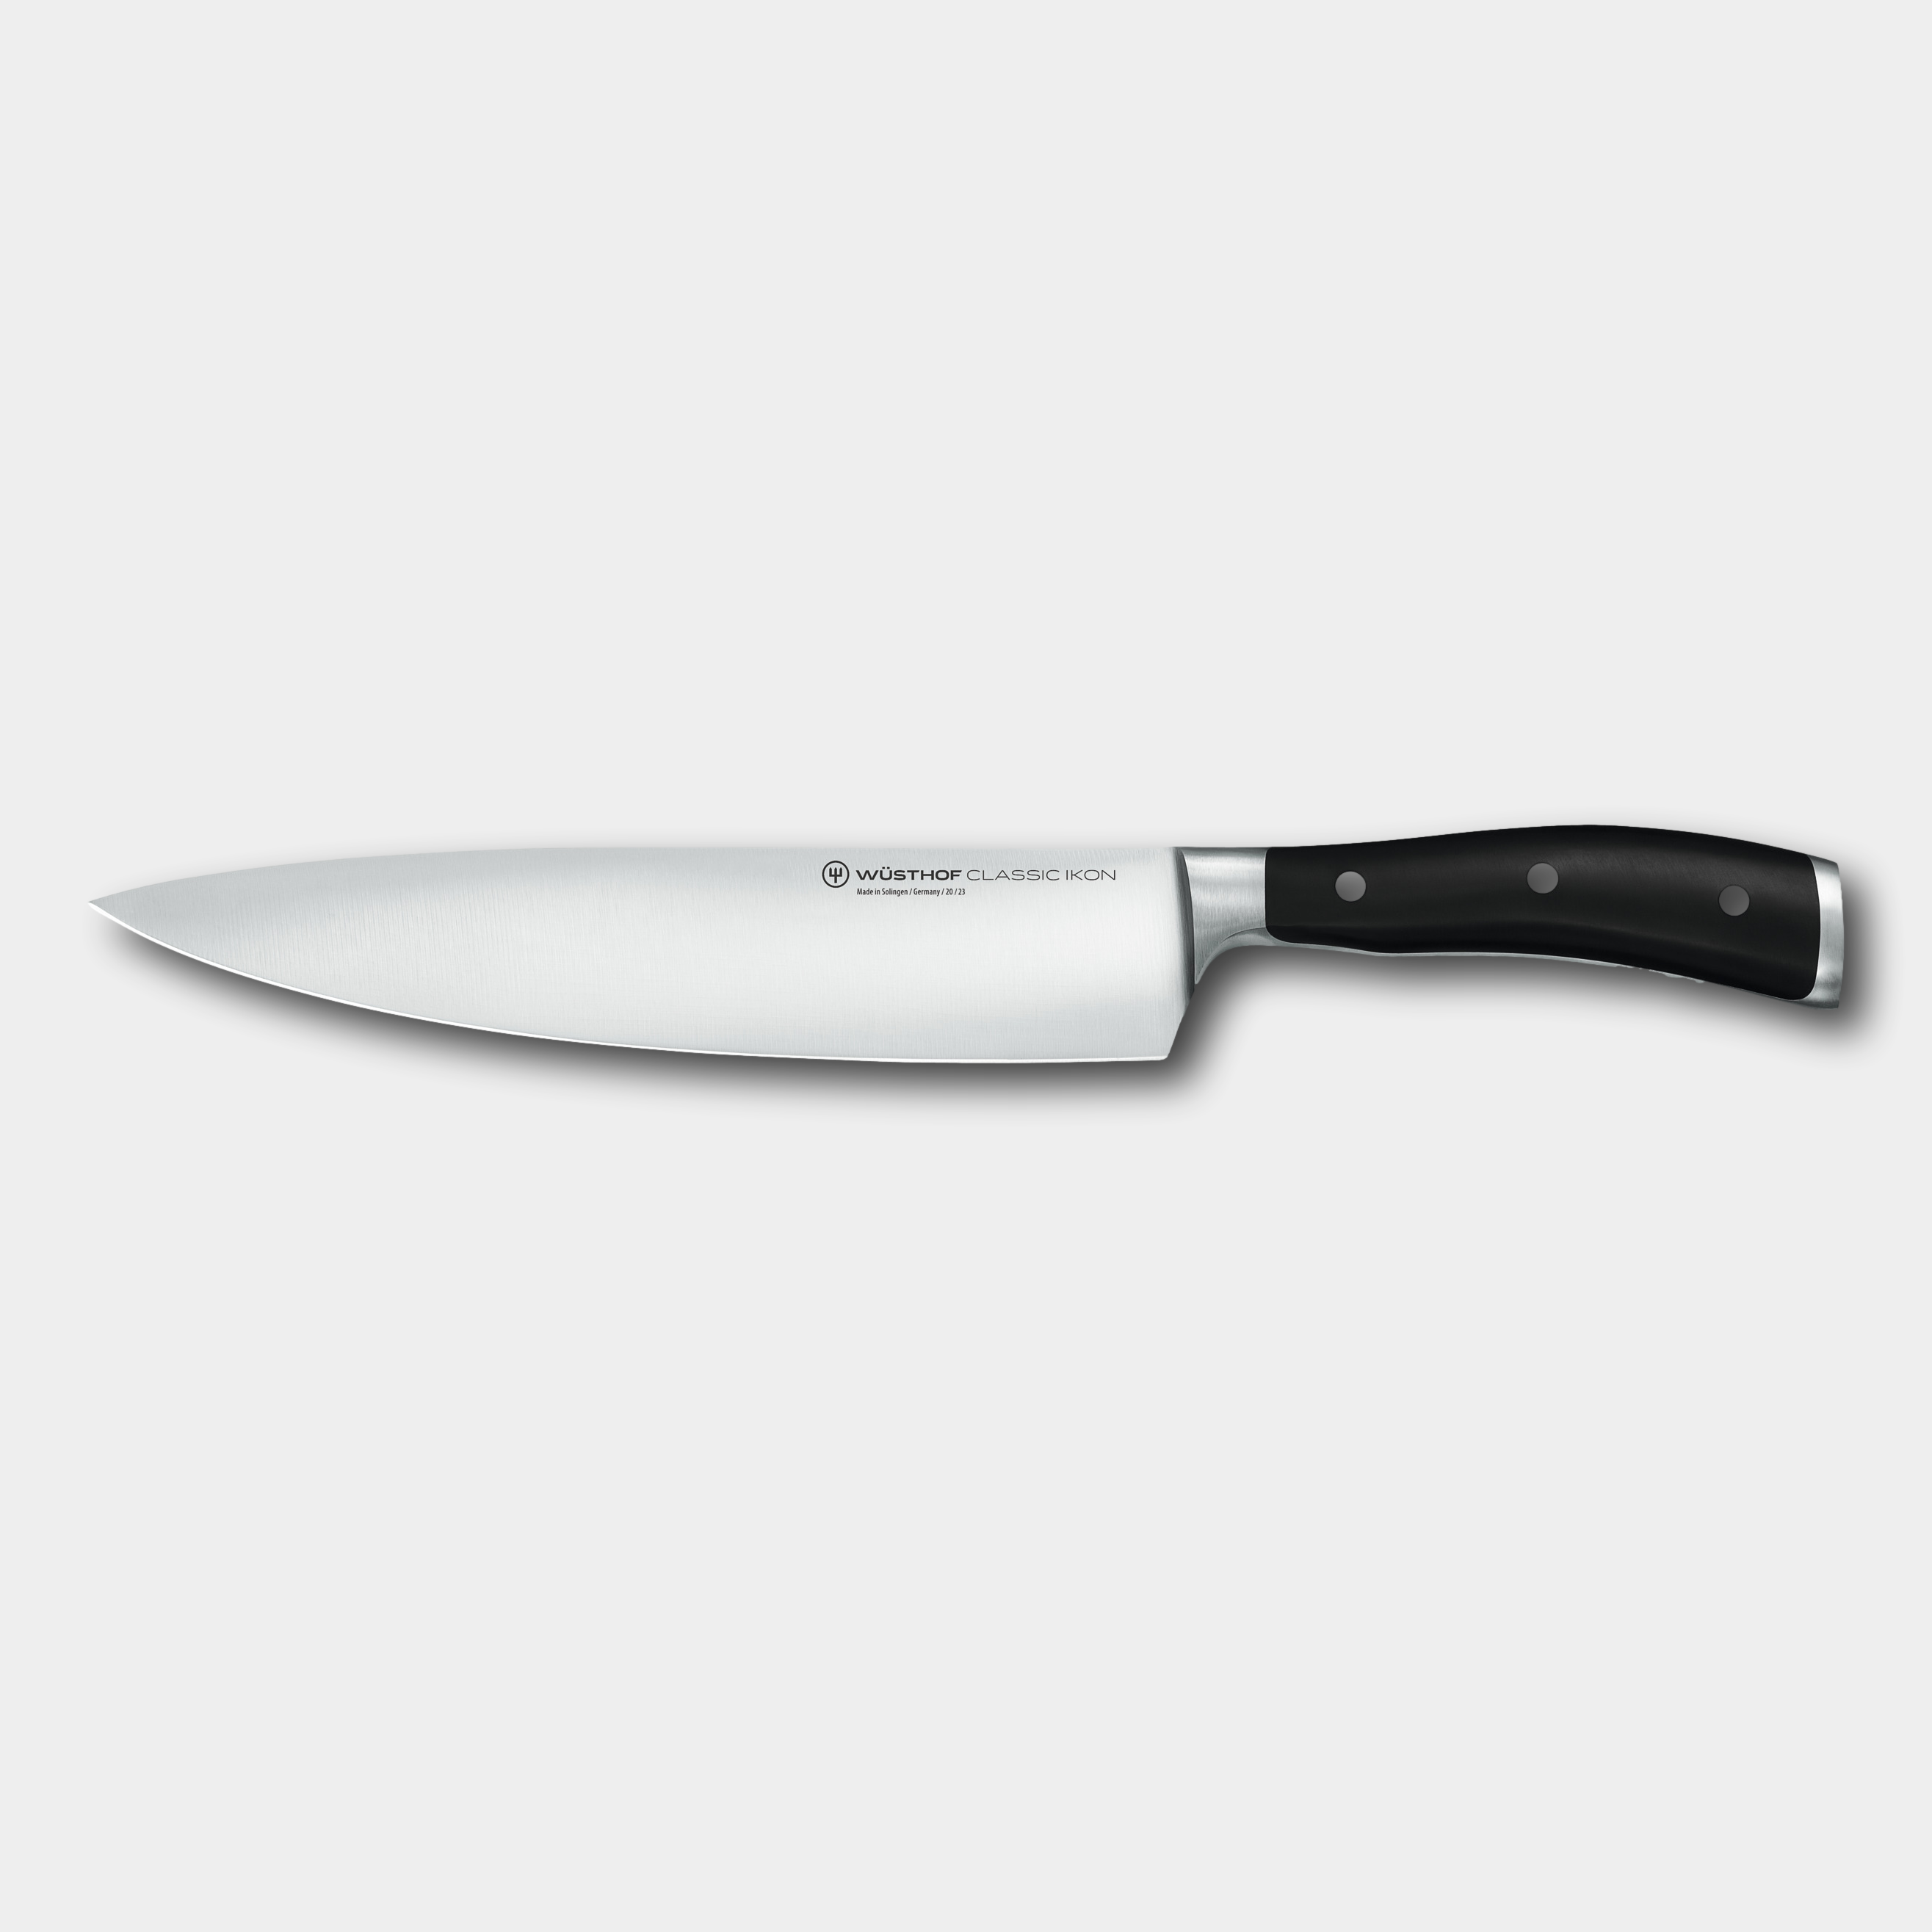 Wusthof Classic IKON 23cm Cook's Knife